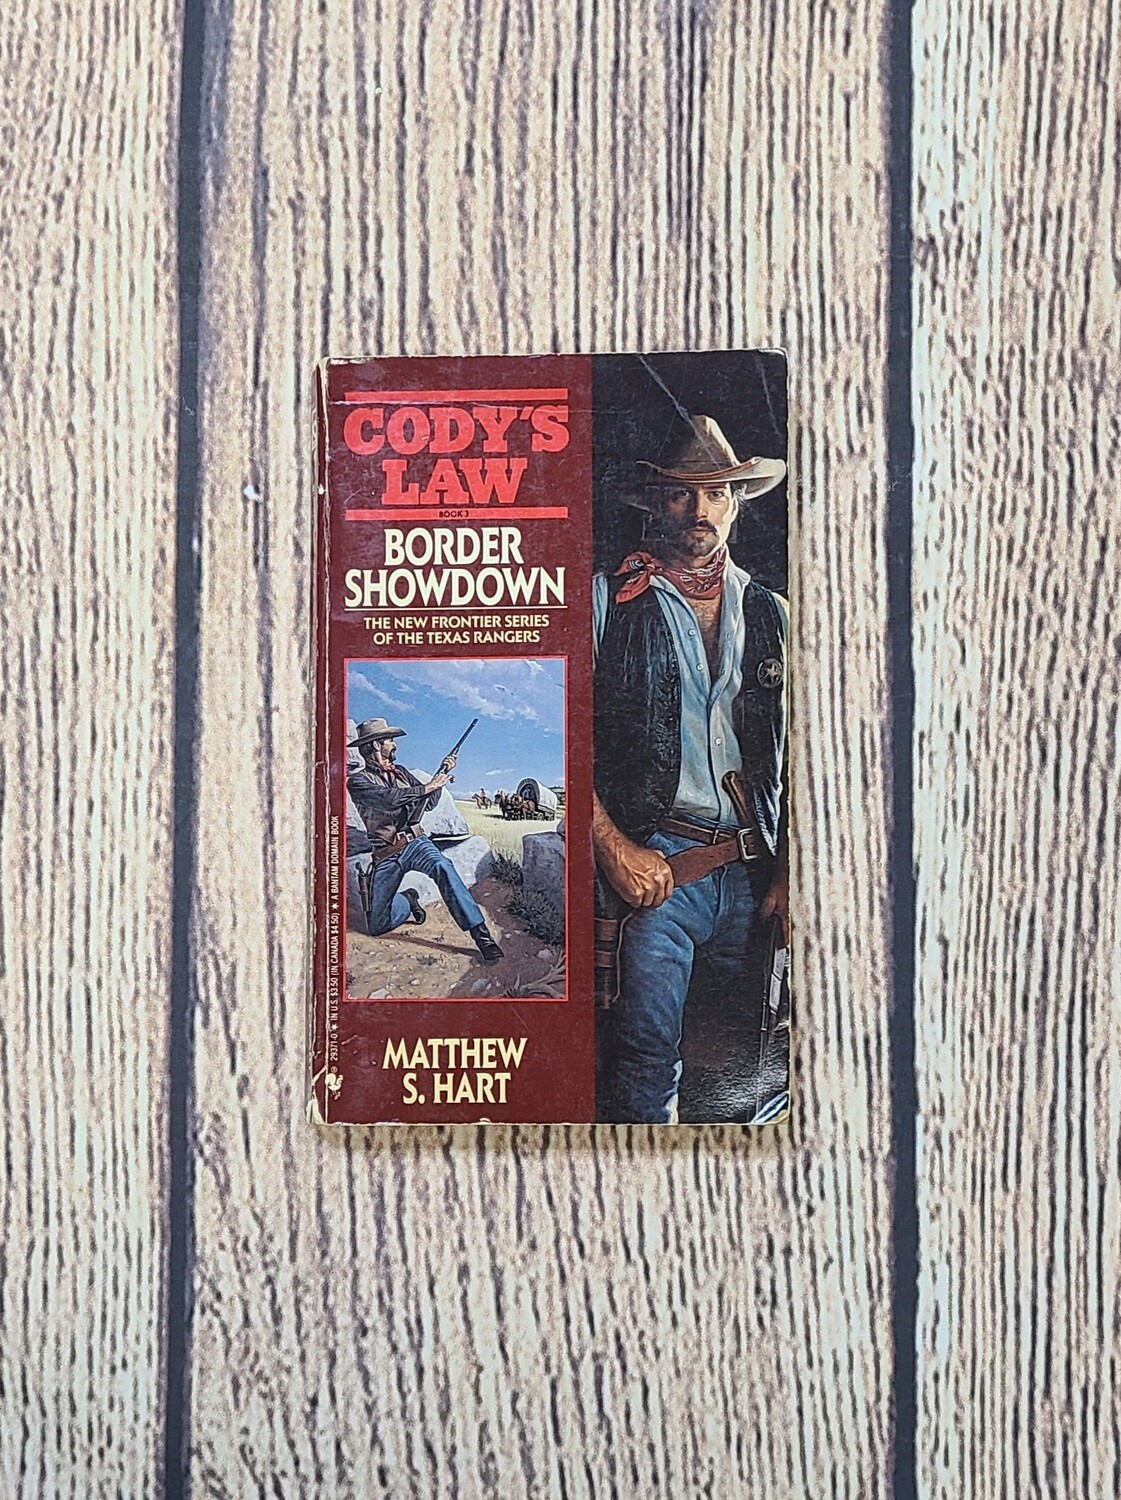 Cody's Law: Border Showdown by Matthew S. Hart